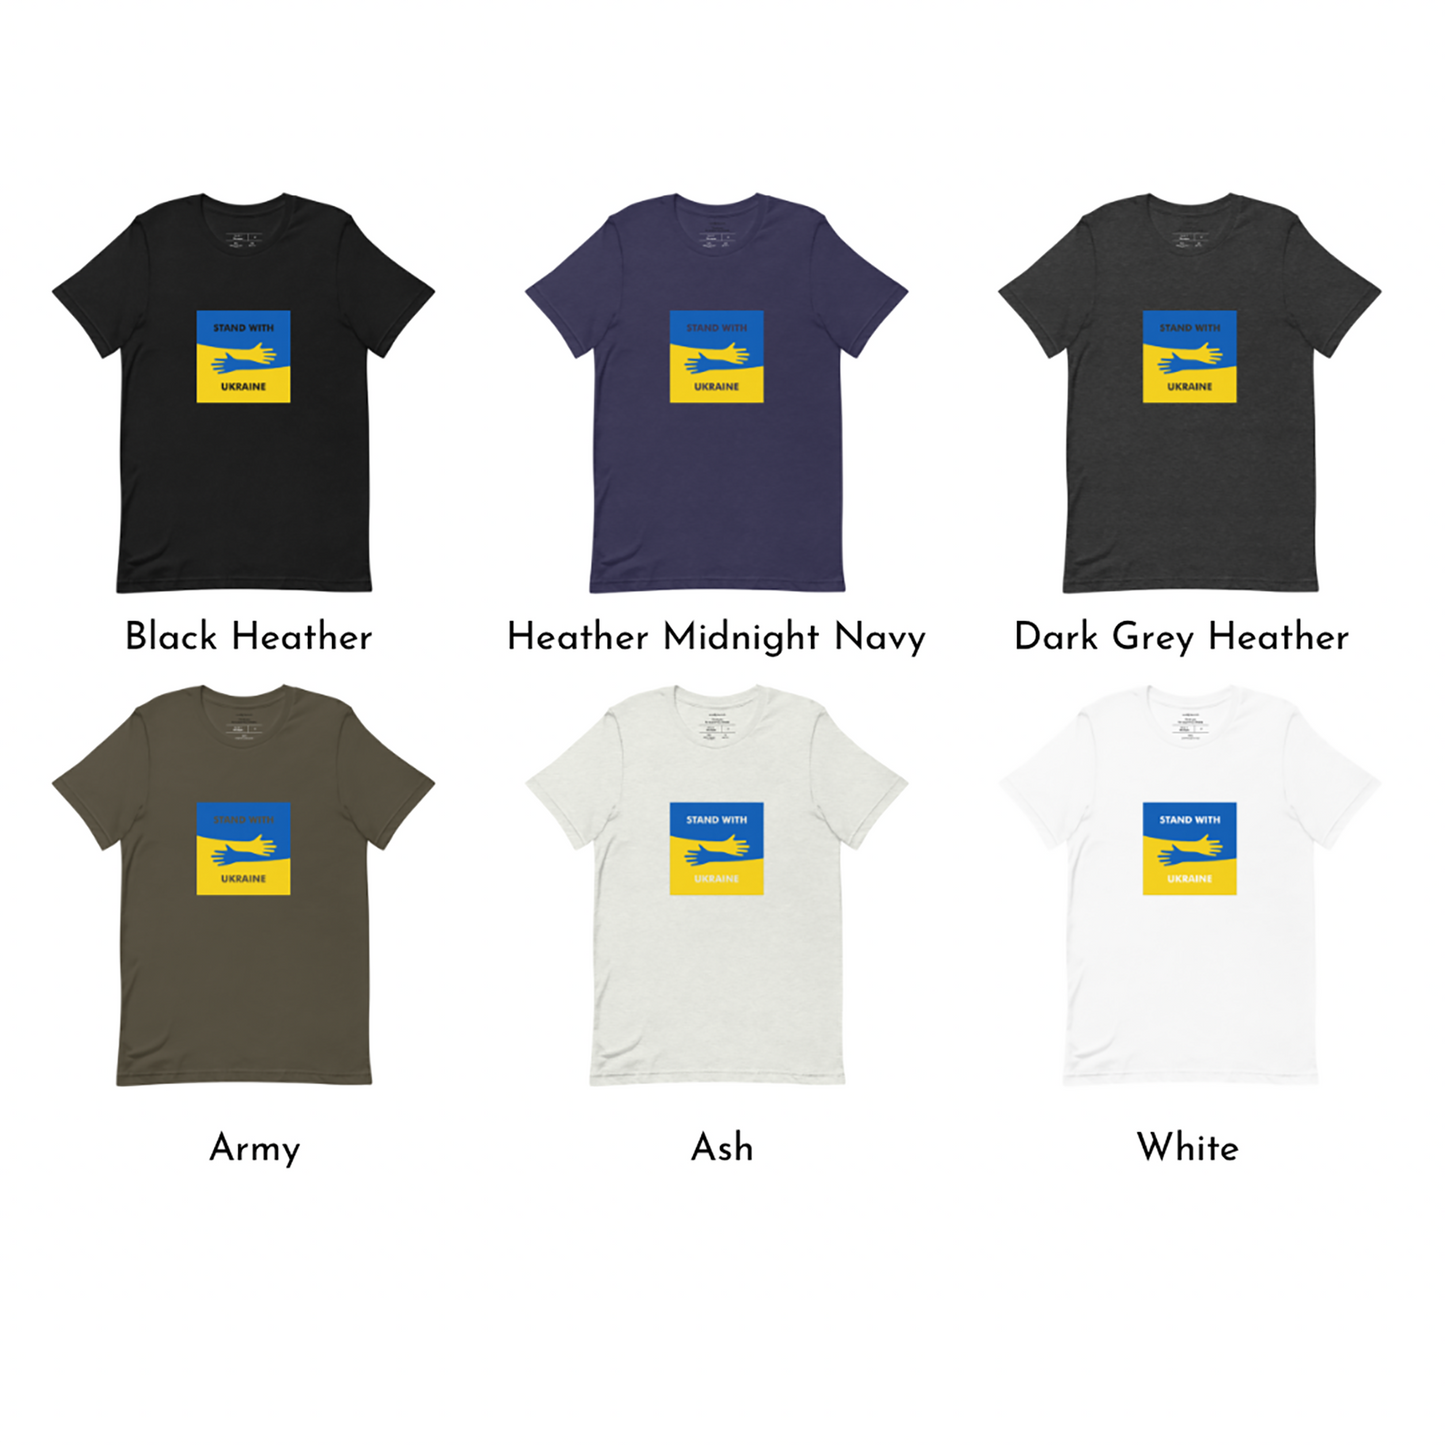 Ukrainian Flag T Shirt, Stand with Ukraine - Short-sleeve Unisex Graphic Tee Shirts